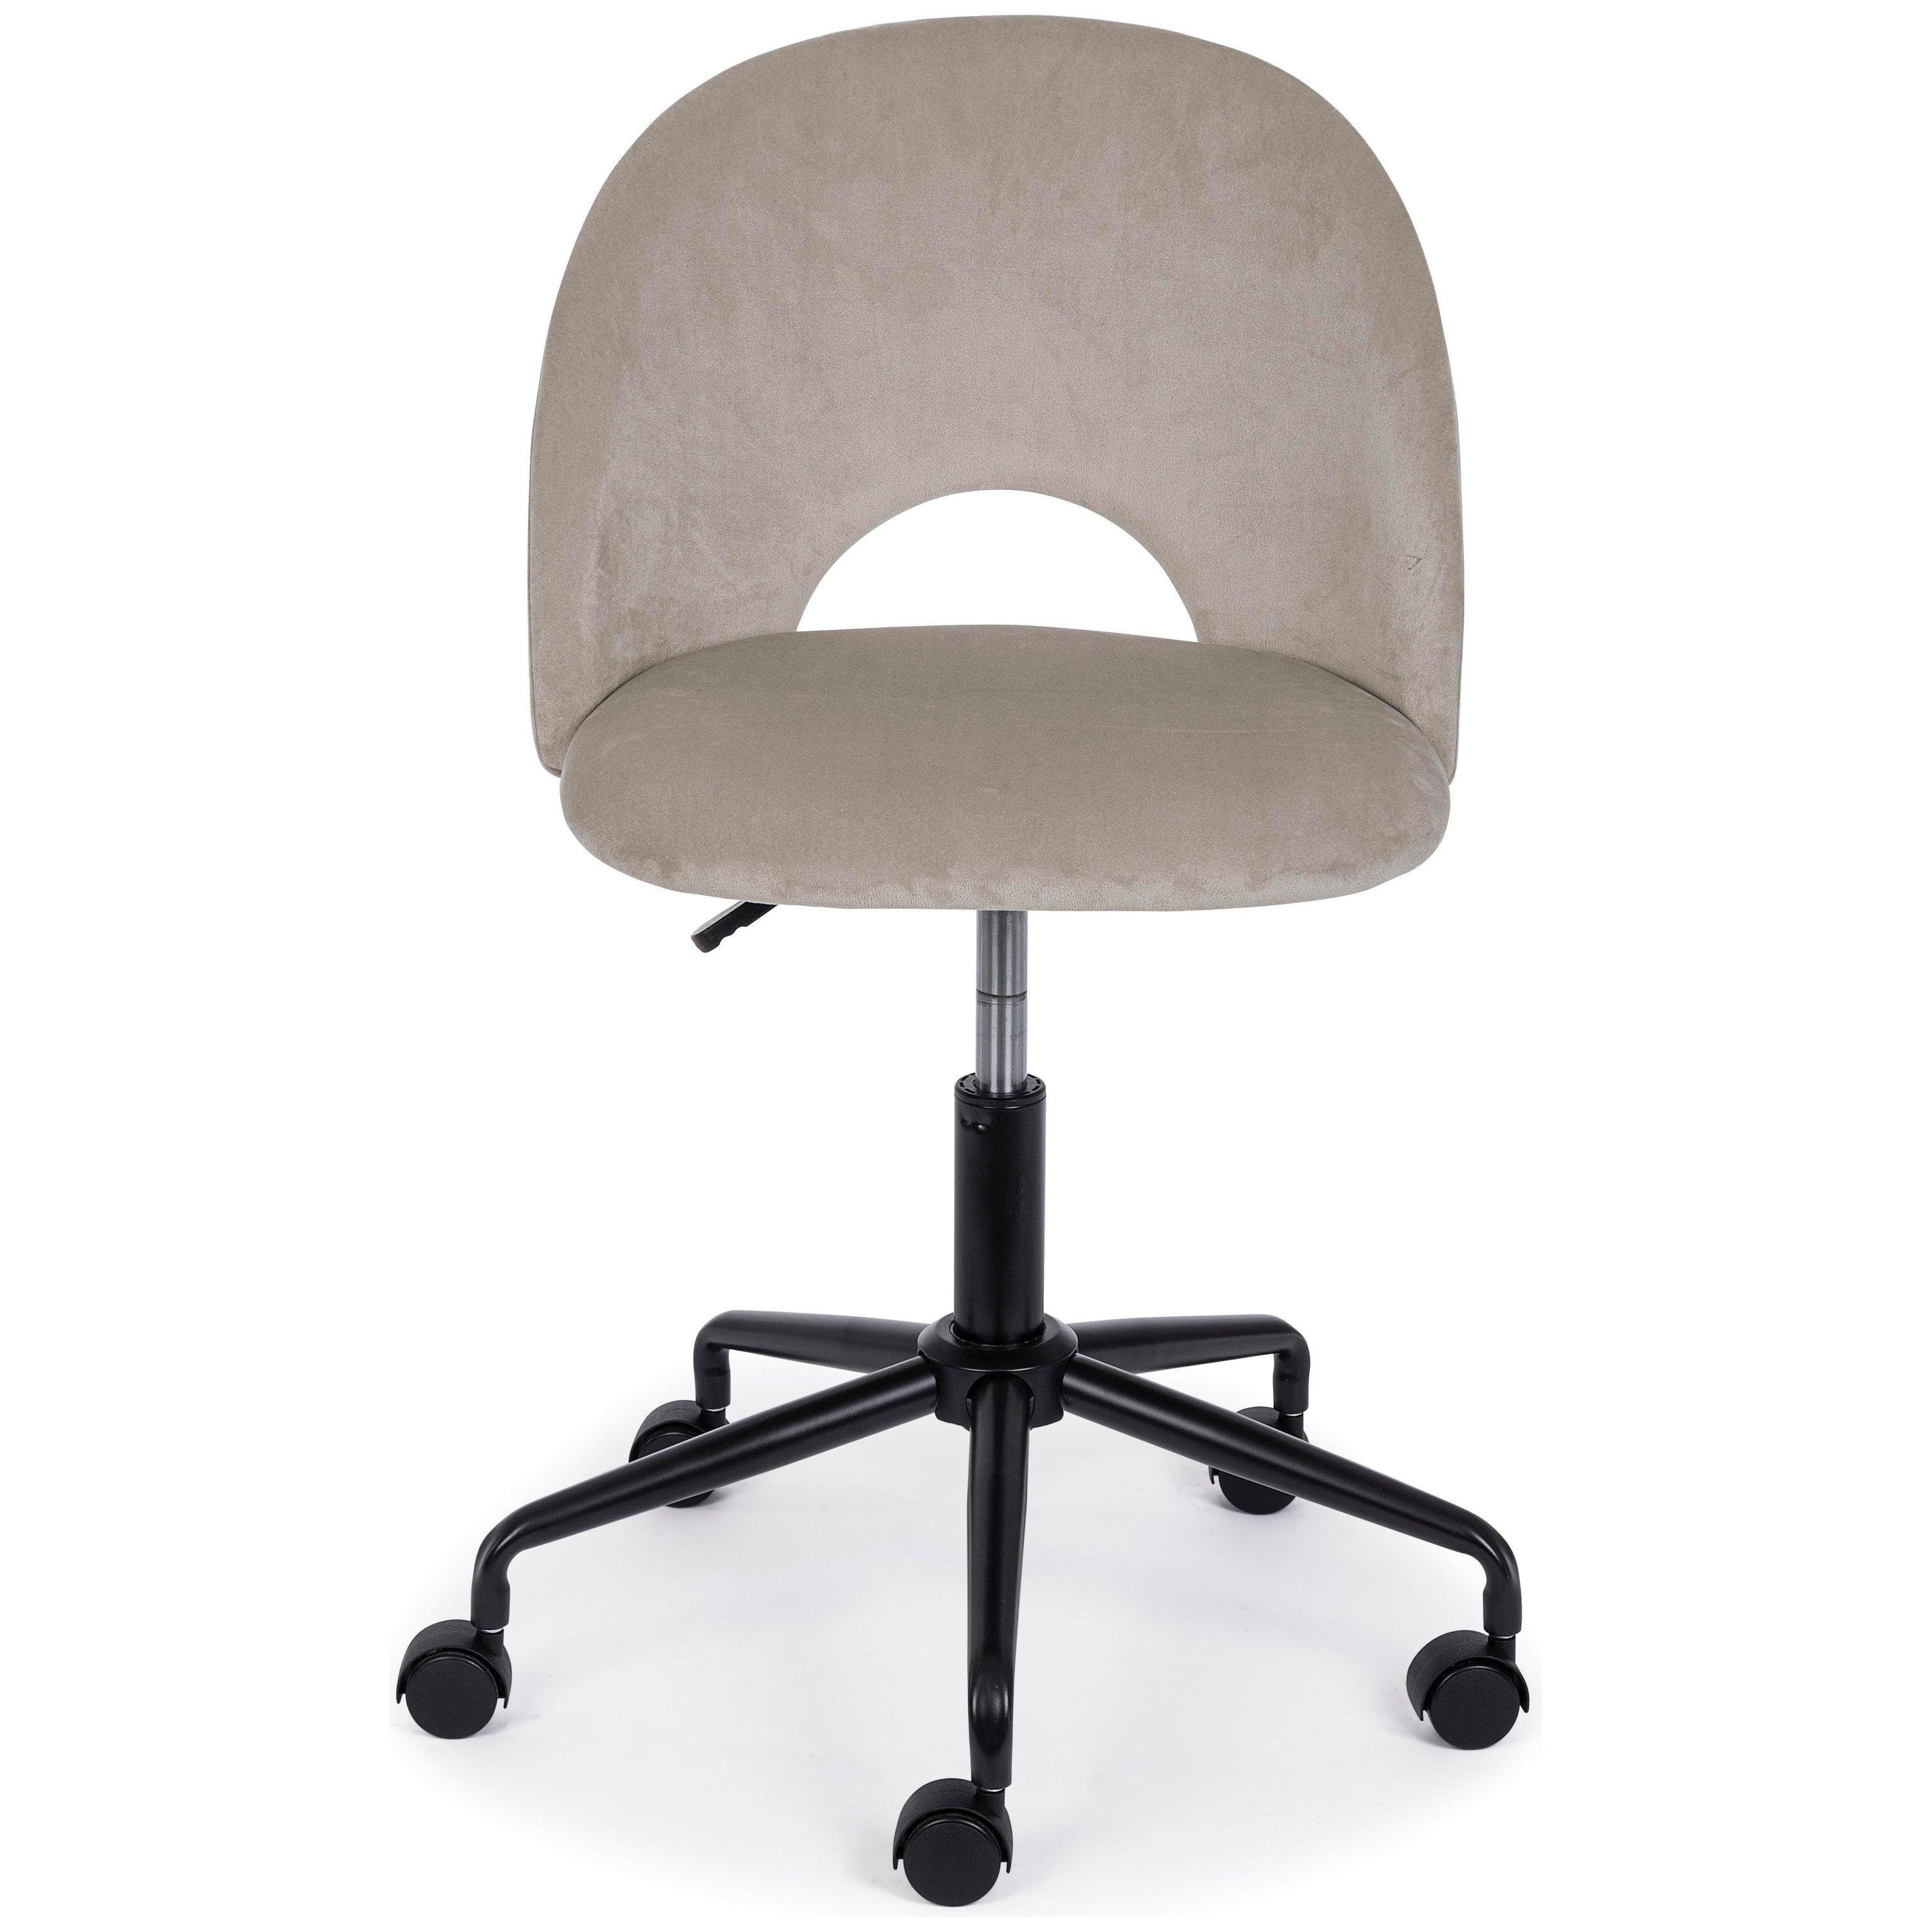 LINZEY biuro kėdė su ratukais, taupe spalva